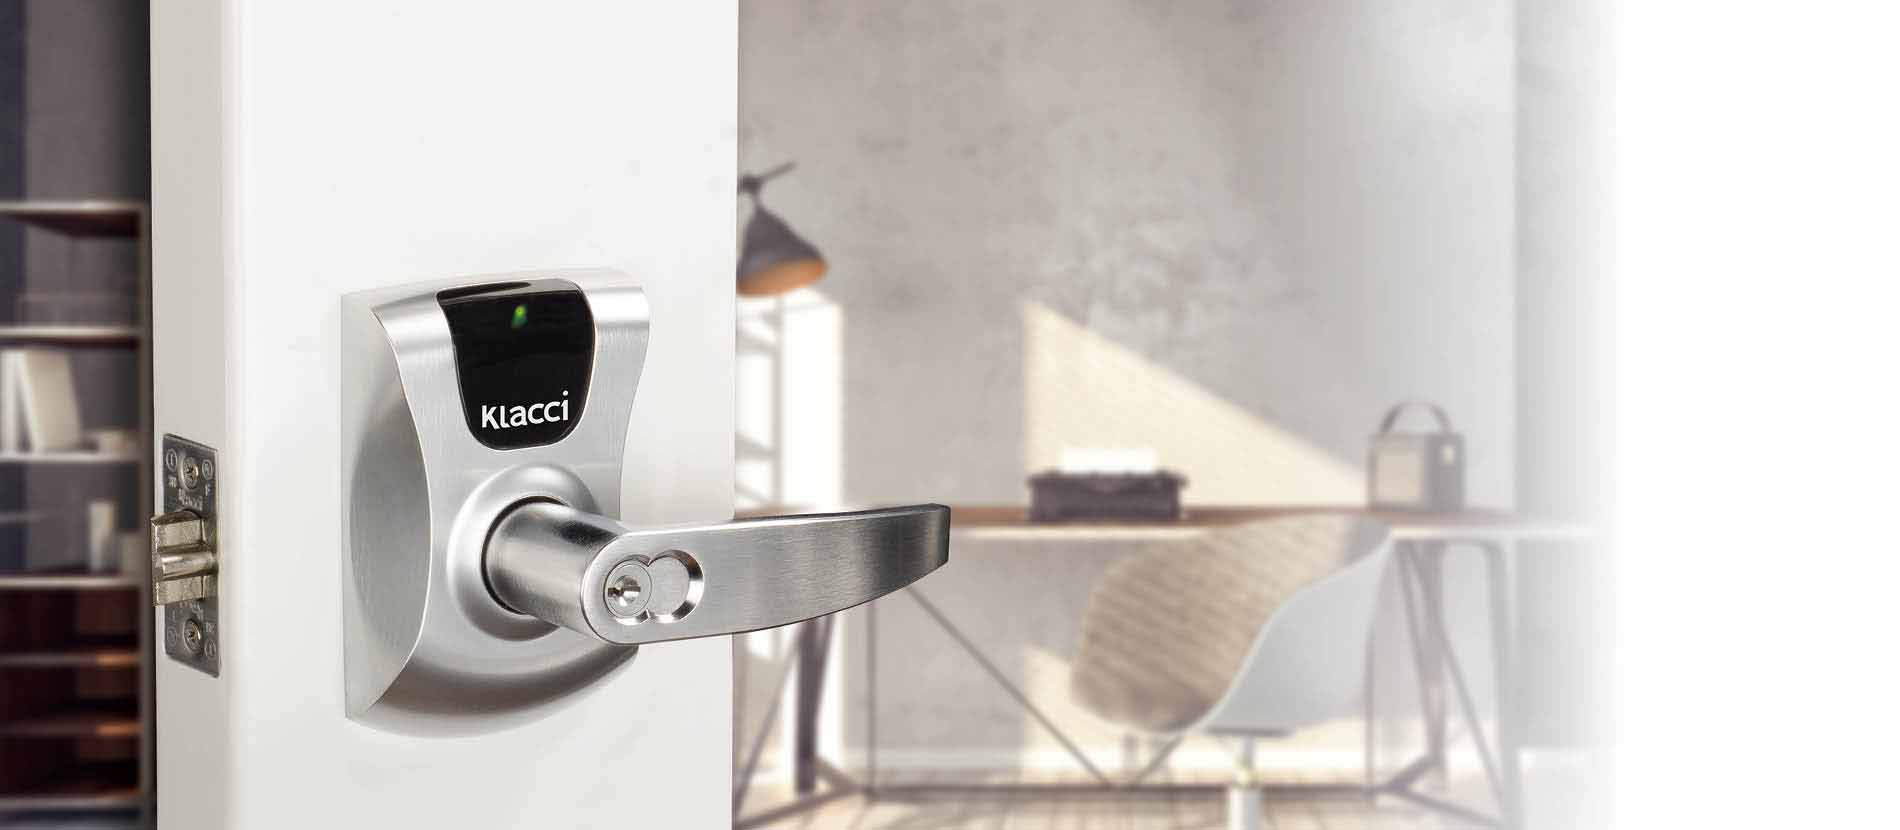 Klacci iF Series Mobile Biometrics Touchless Smart Lock iF-01 أقفال أسطوانية